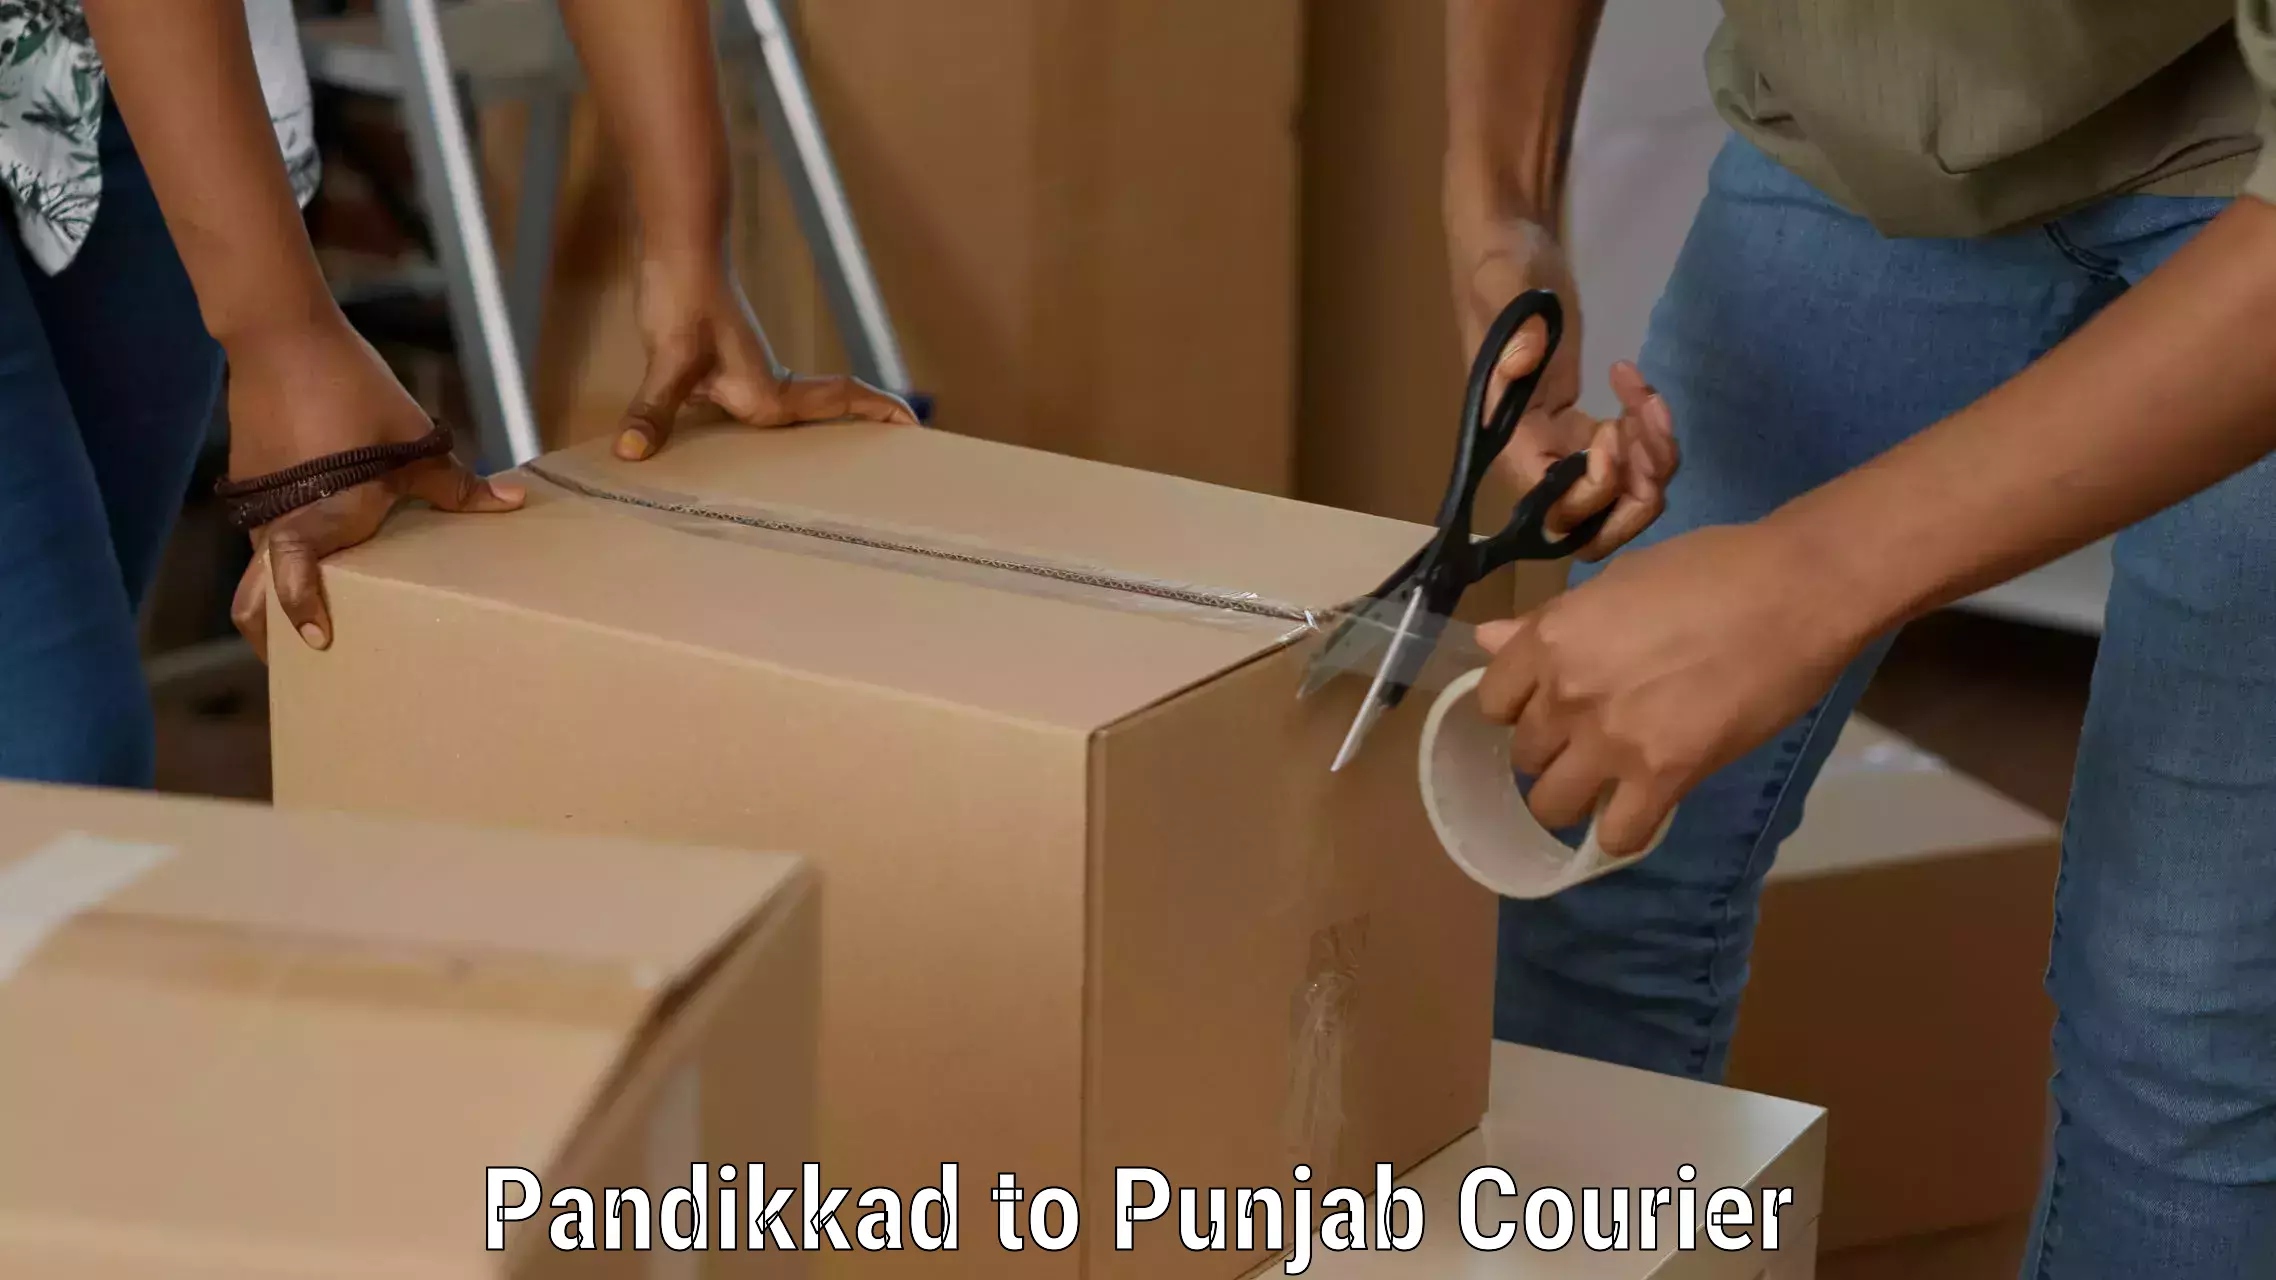 Modern delivery methods Pandikkad to Patiala